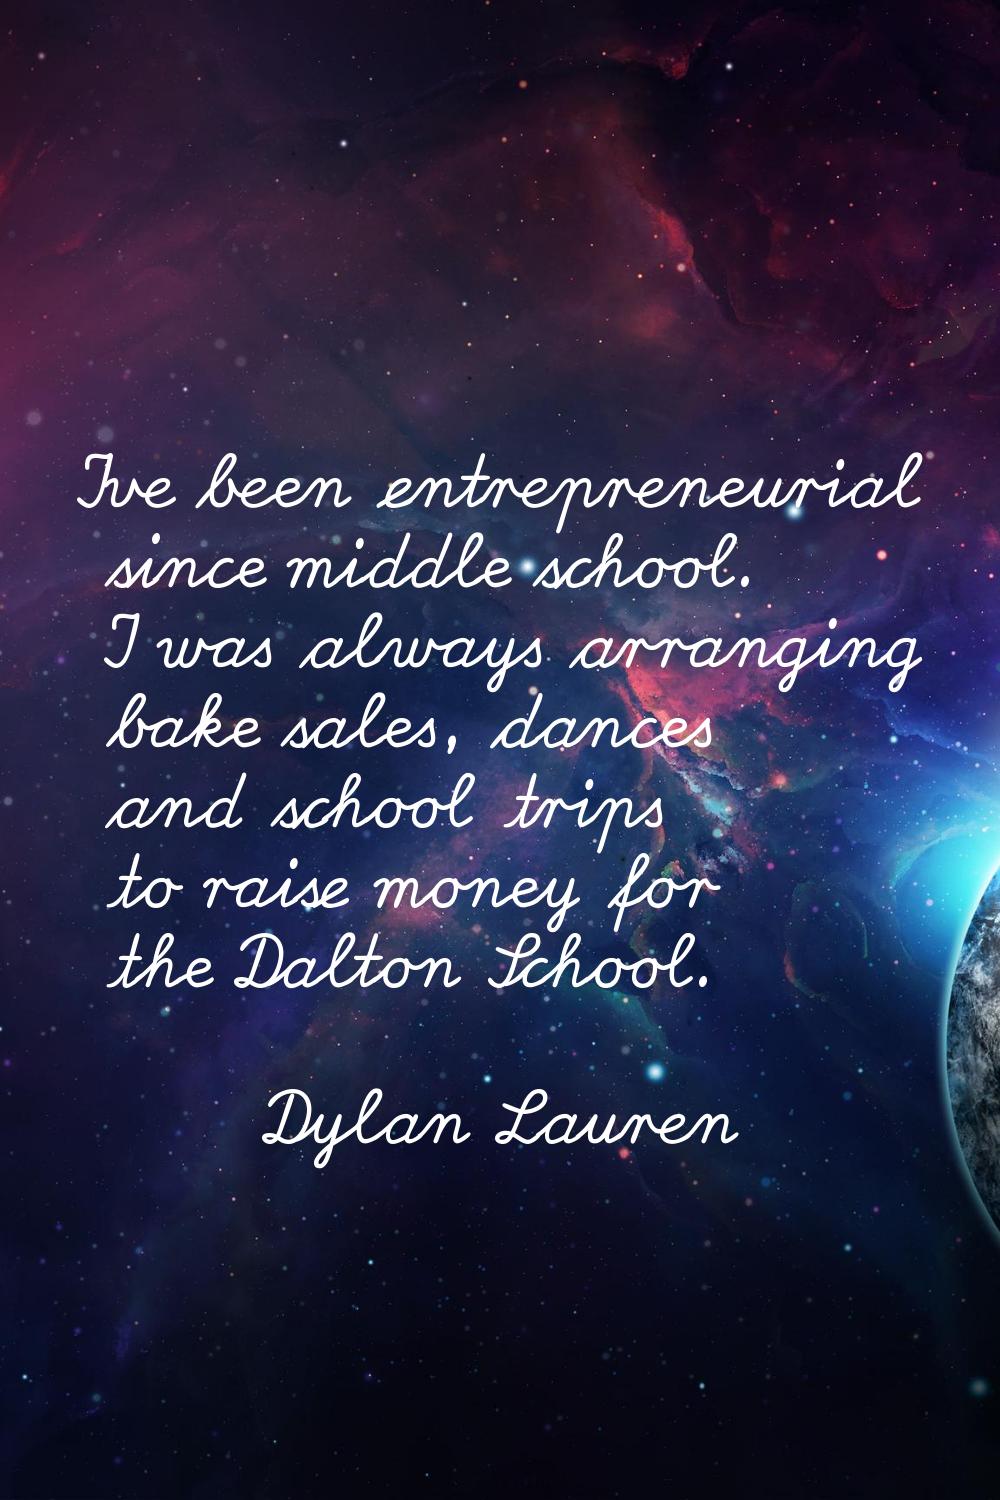 I've been entrepreneurial since middle school. I was always arranging bake sales, dances and school